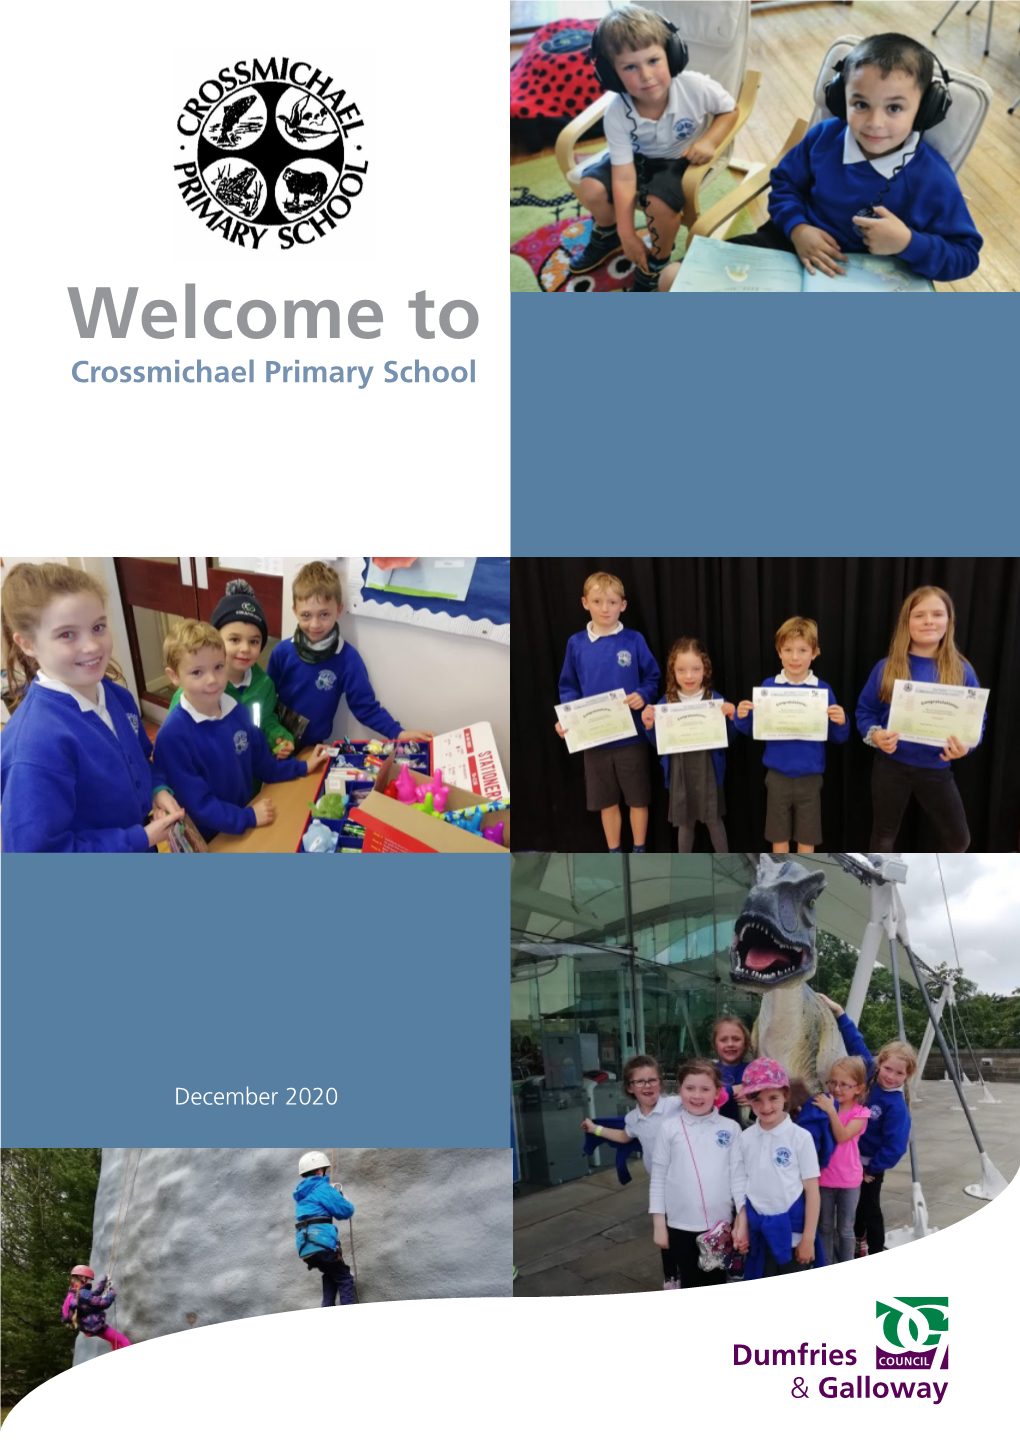 Crossmichael Primary School